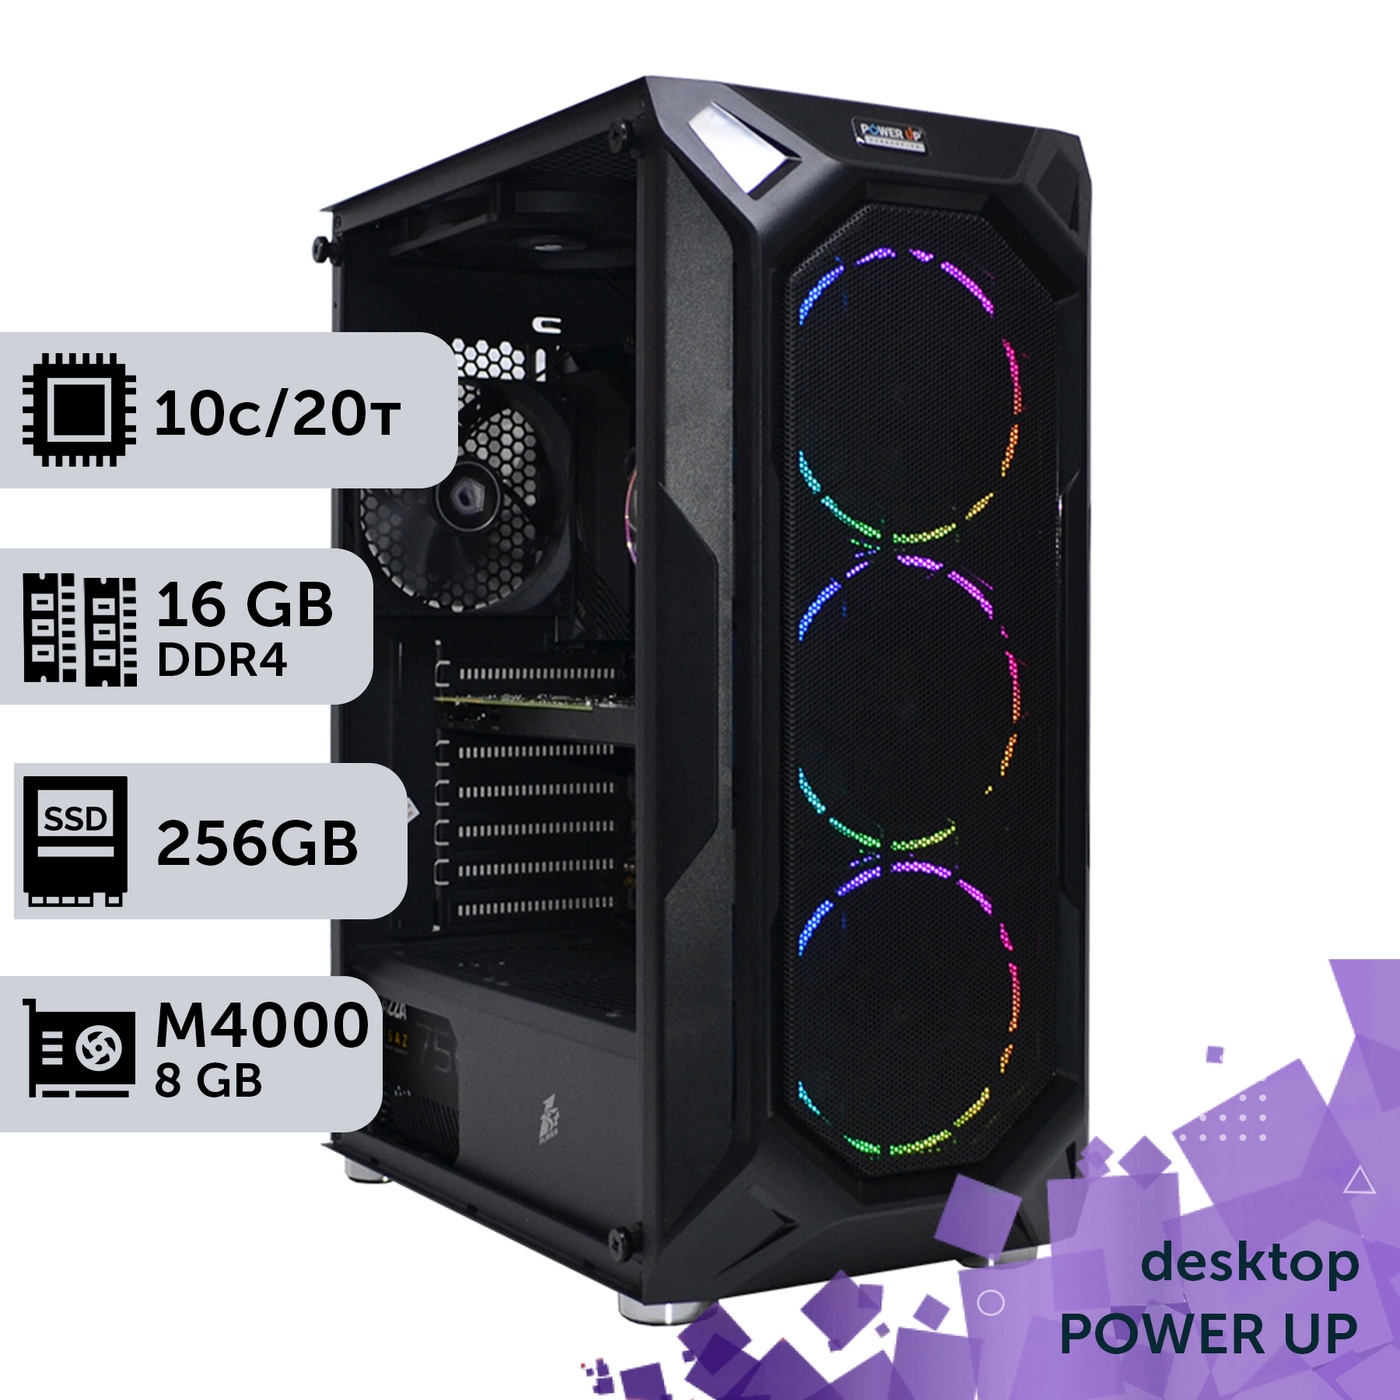 Рабочая станция PowerUp Desktop #27 Core i9 10900K/16 GB/HDD 1 TB/SSD 256GB/NVIDIA Quadro M4000 8GB